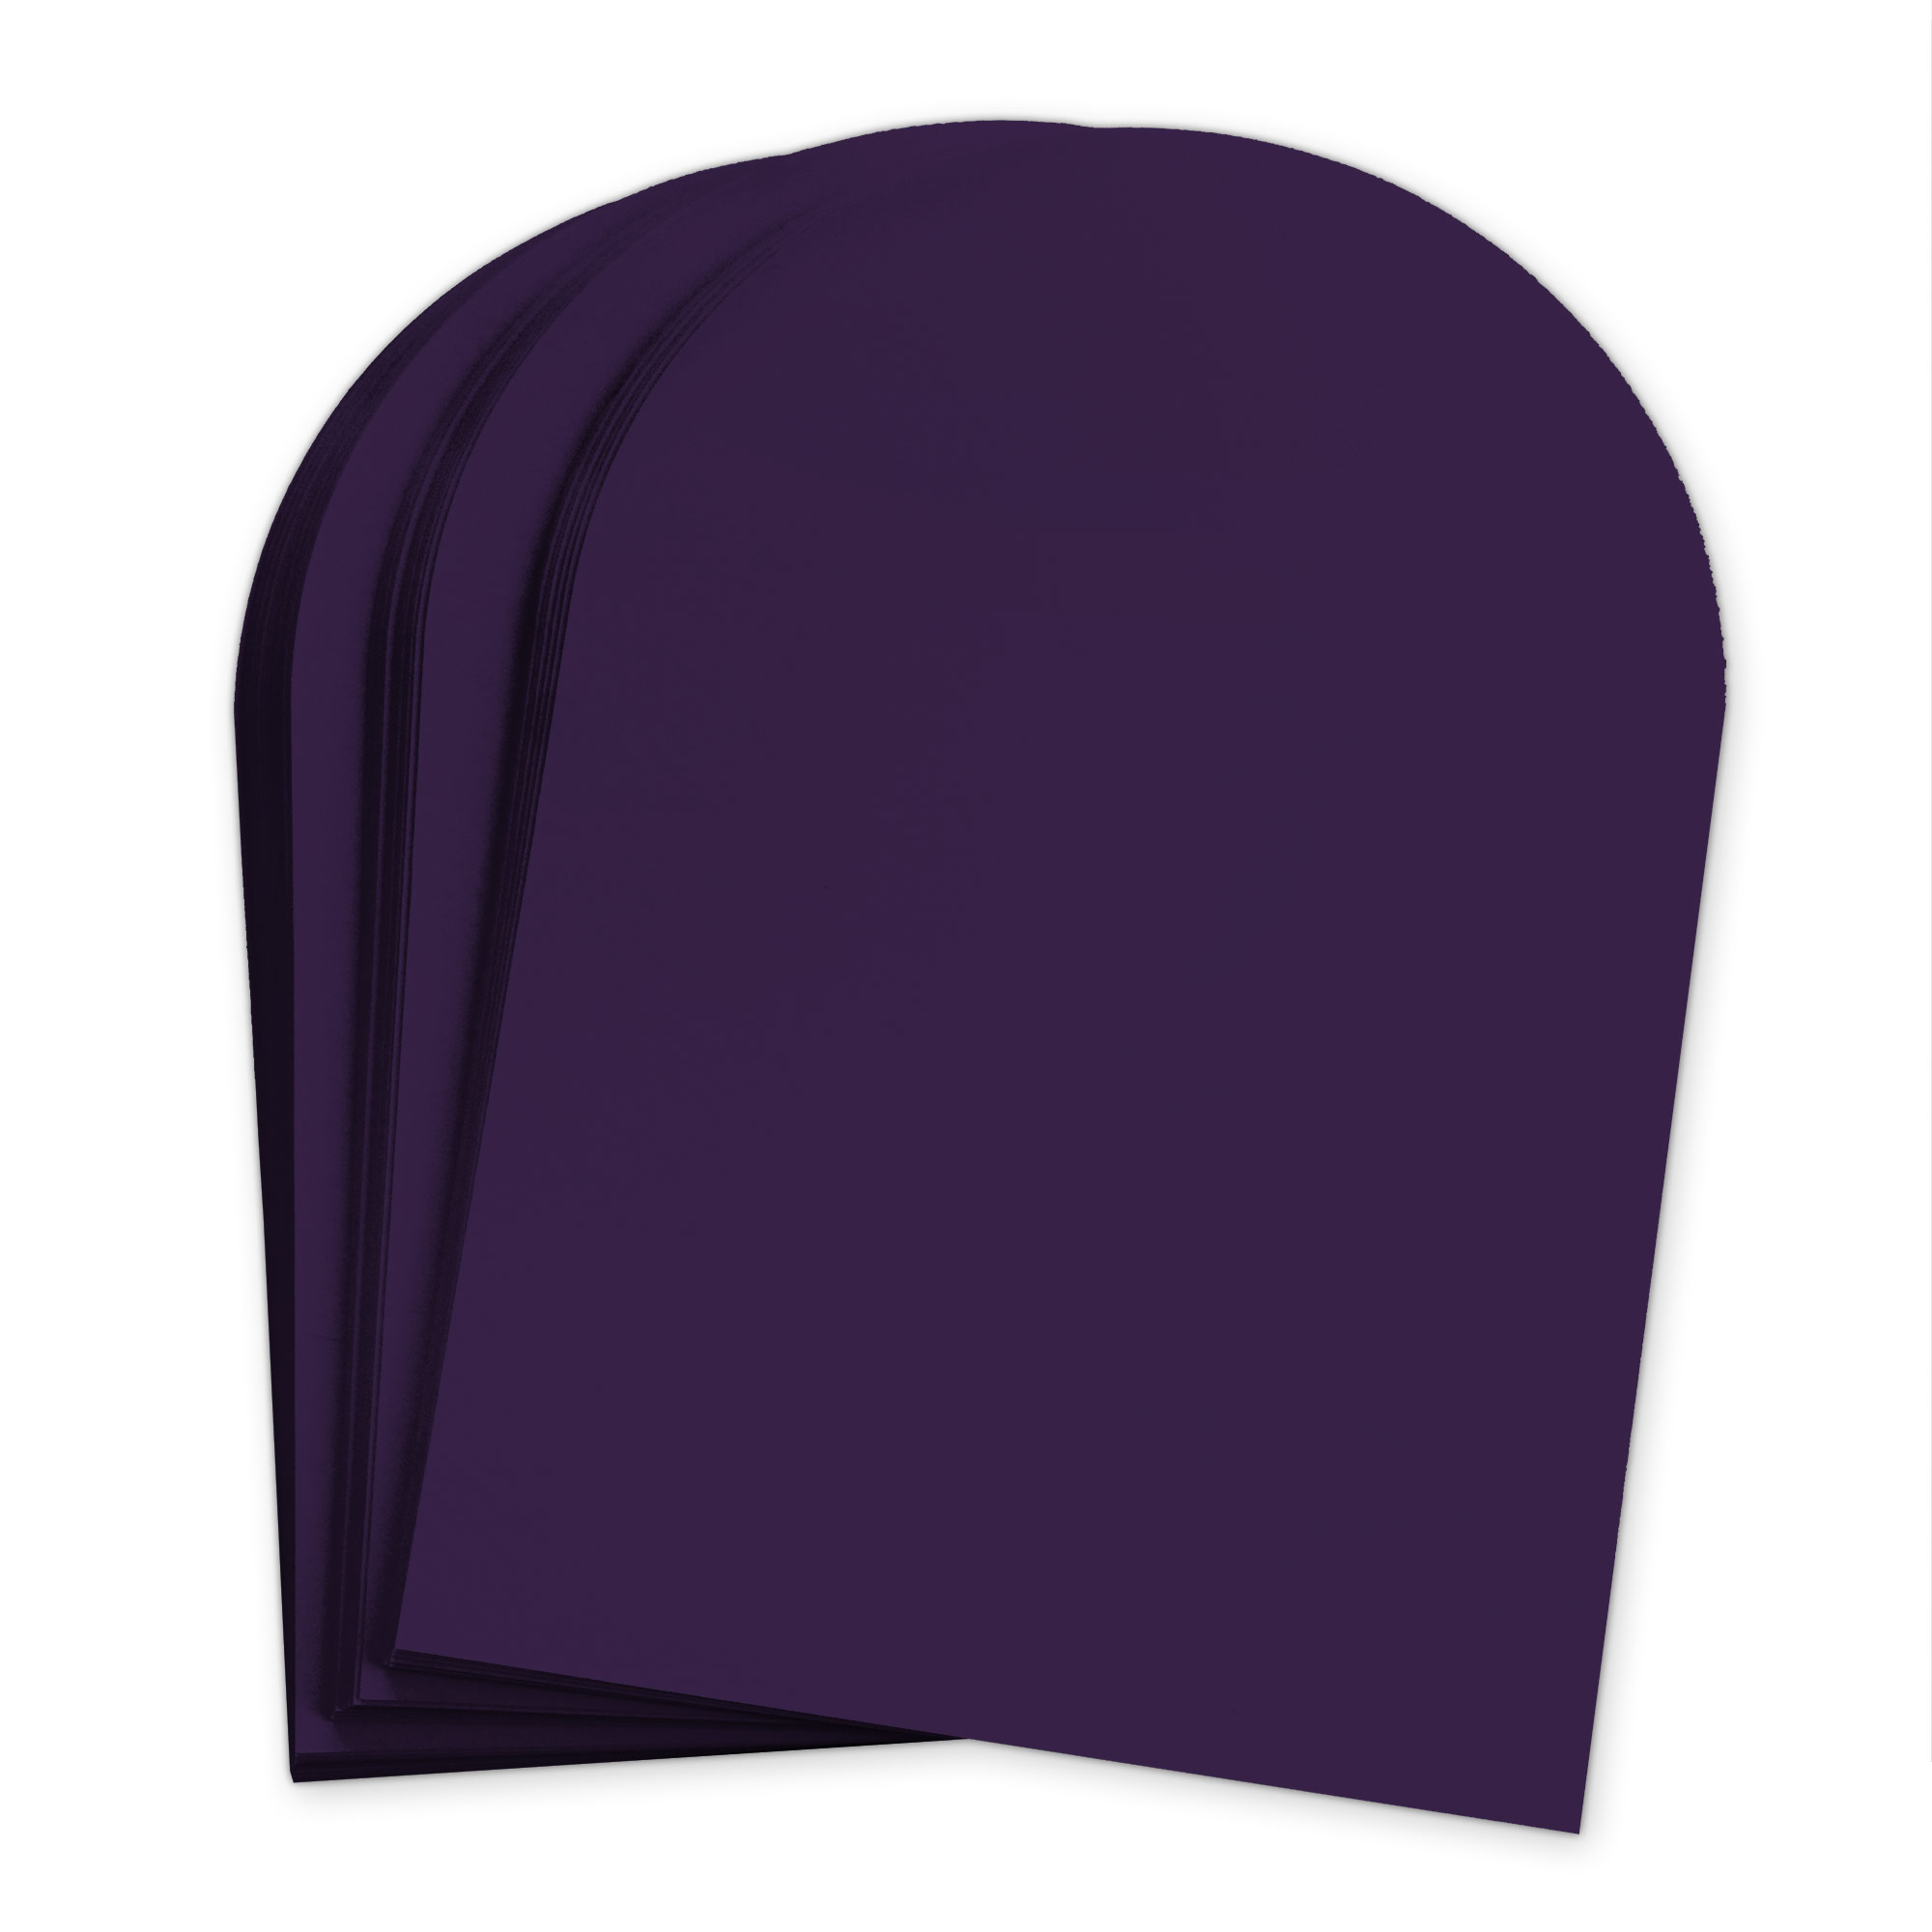 Grape Purple Arch Shaped Card - A2 Gmund Colors Matt 4 1/4 x 5 1/2 111C